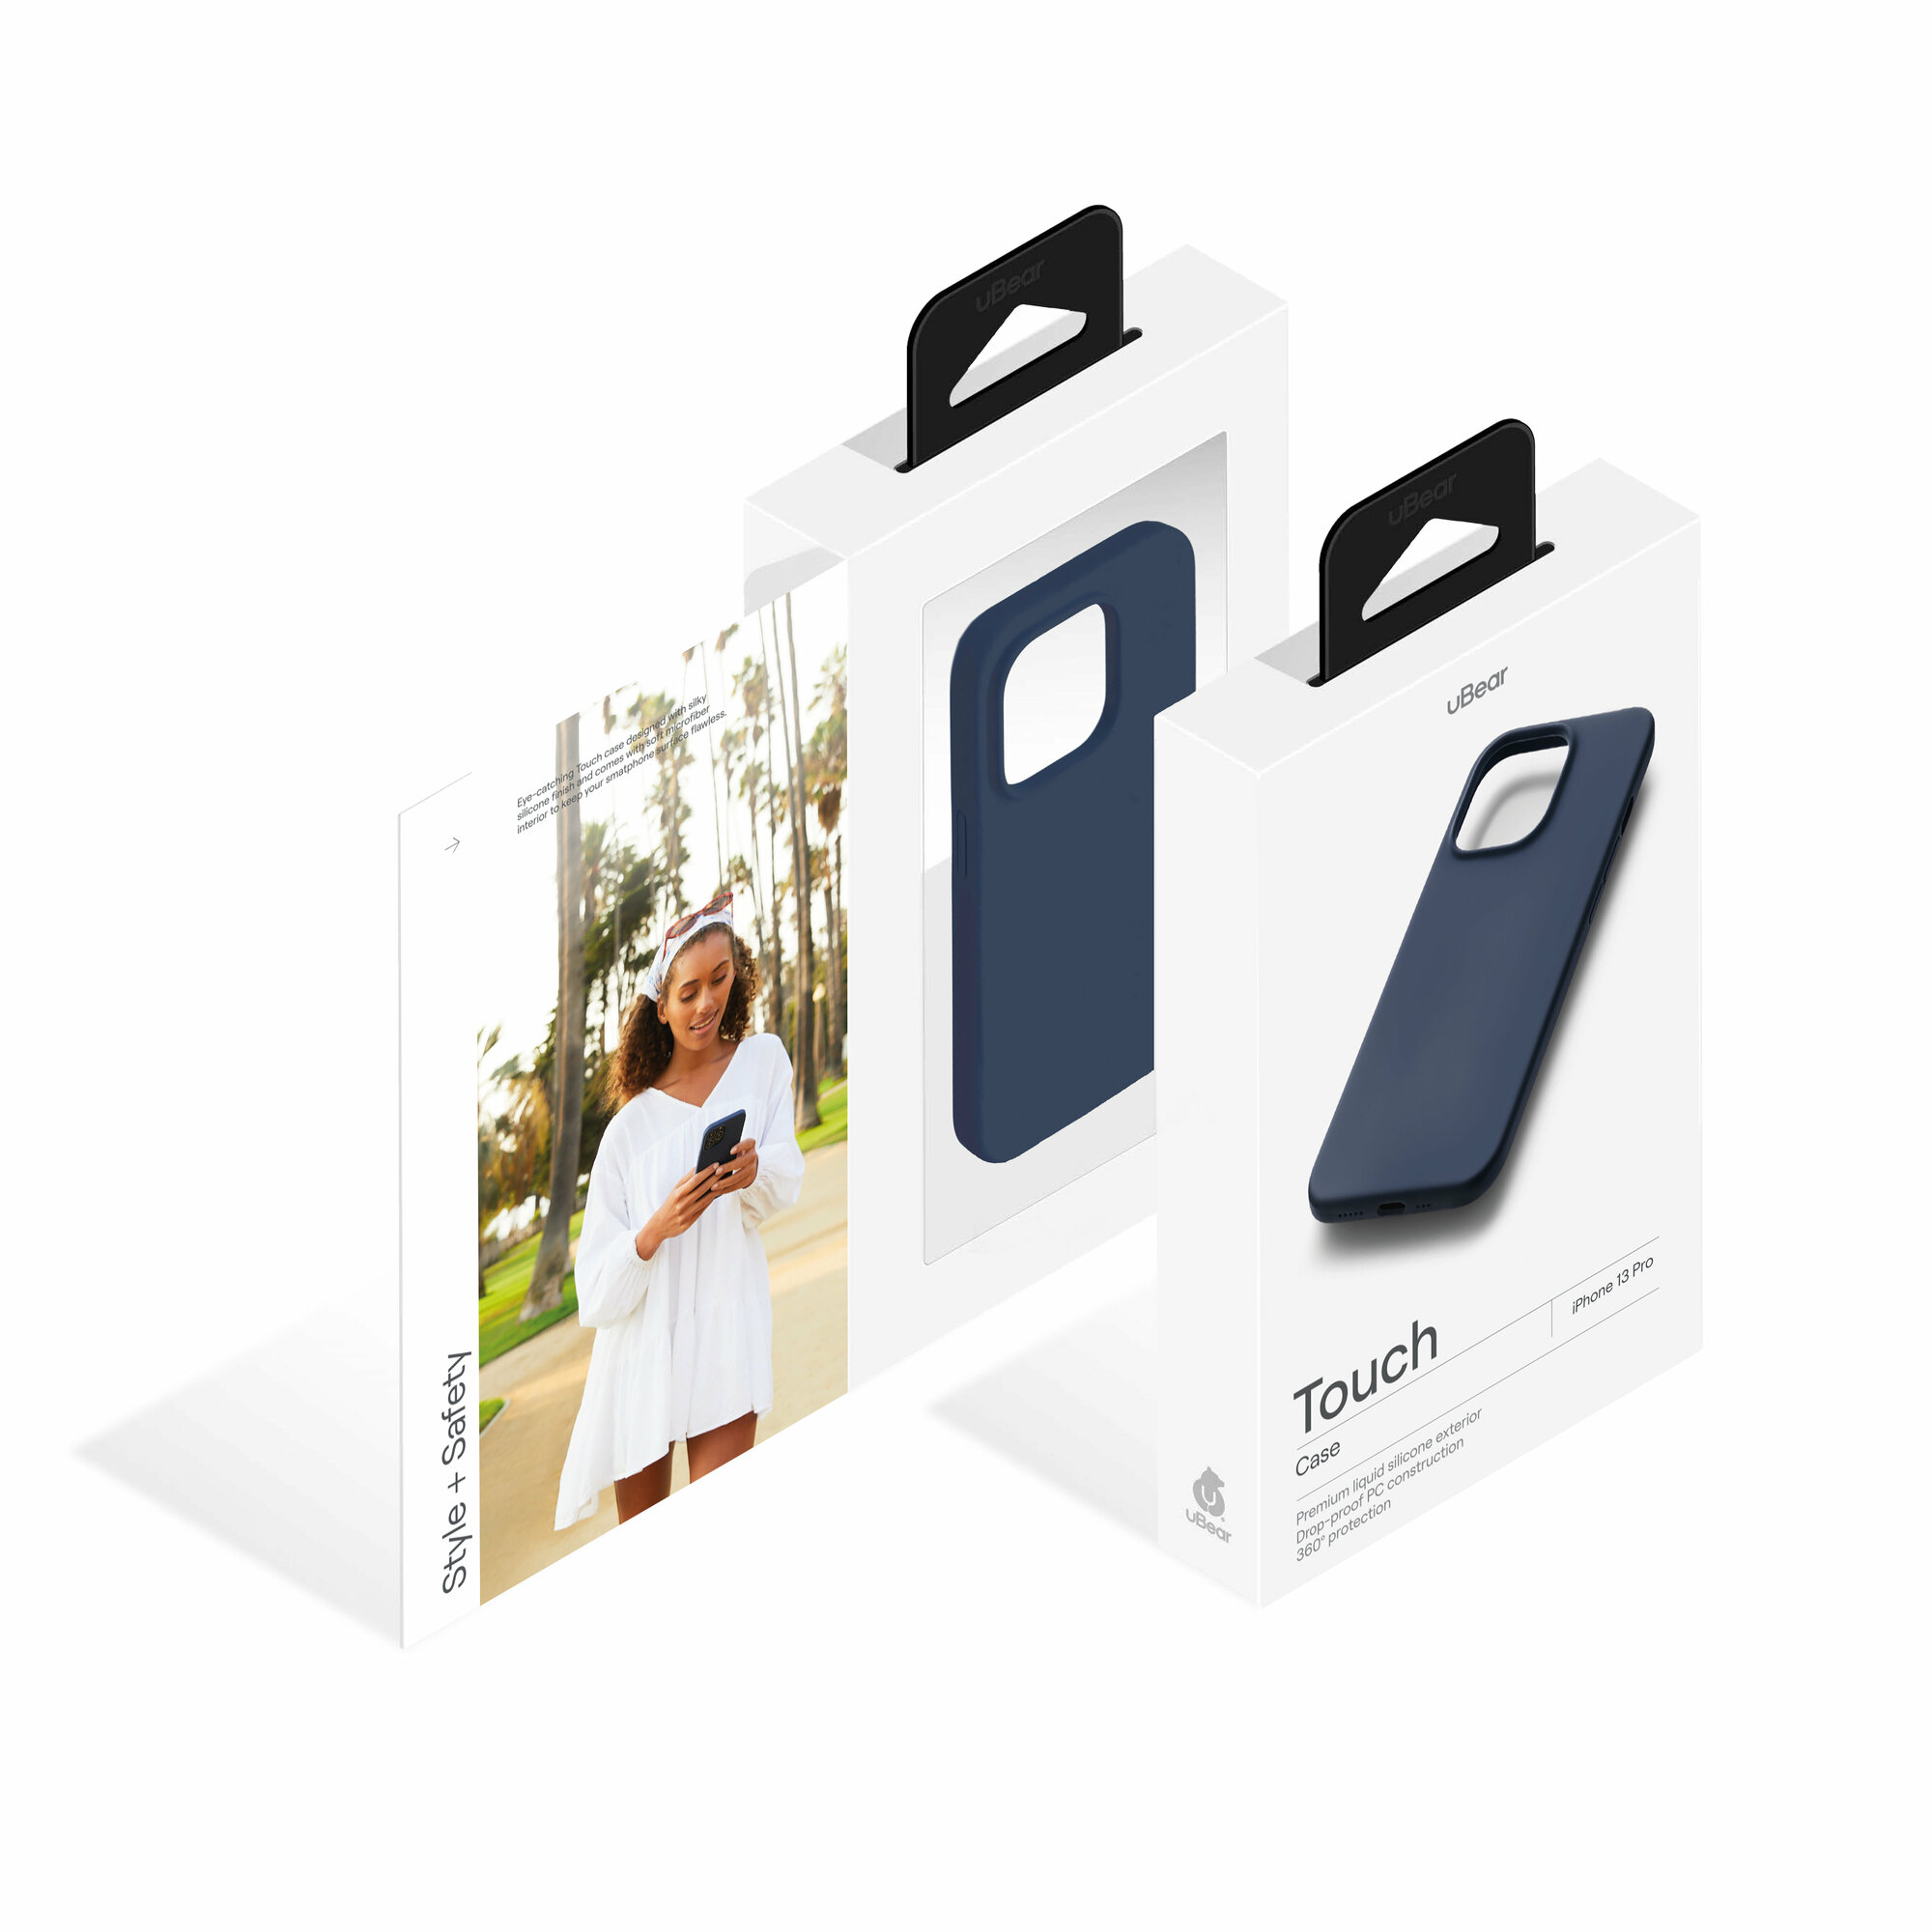 Чехол uBear Touch Case (Liquid silicone) для iPhone 13 Pro, синий